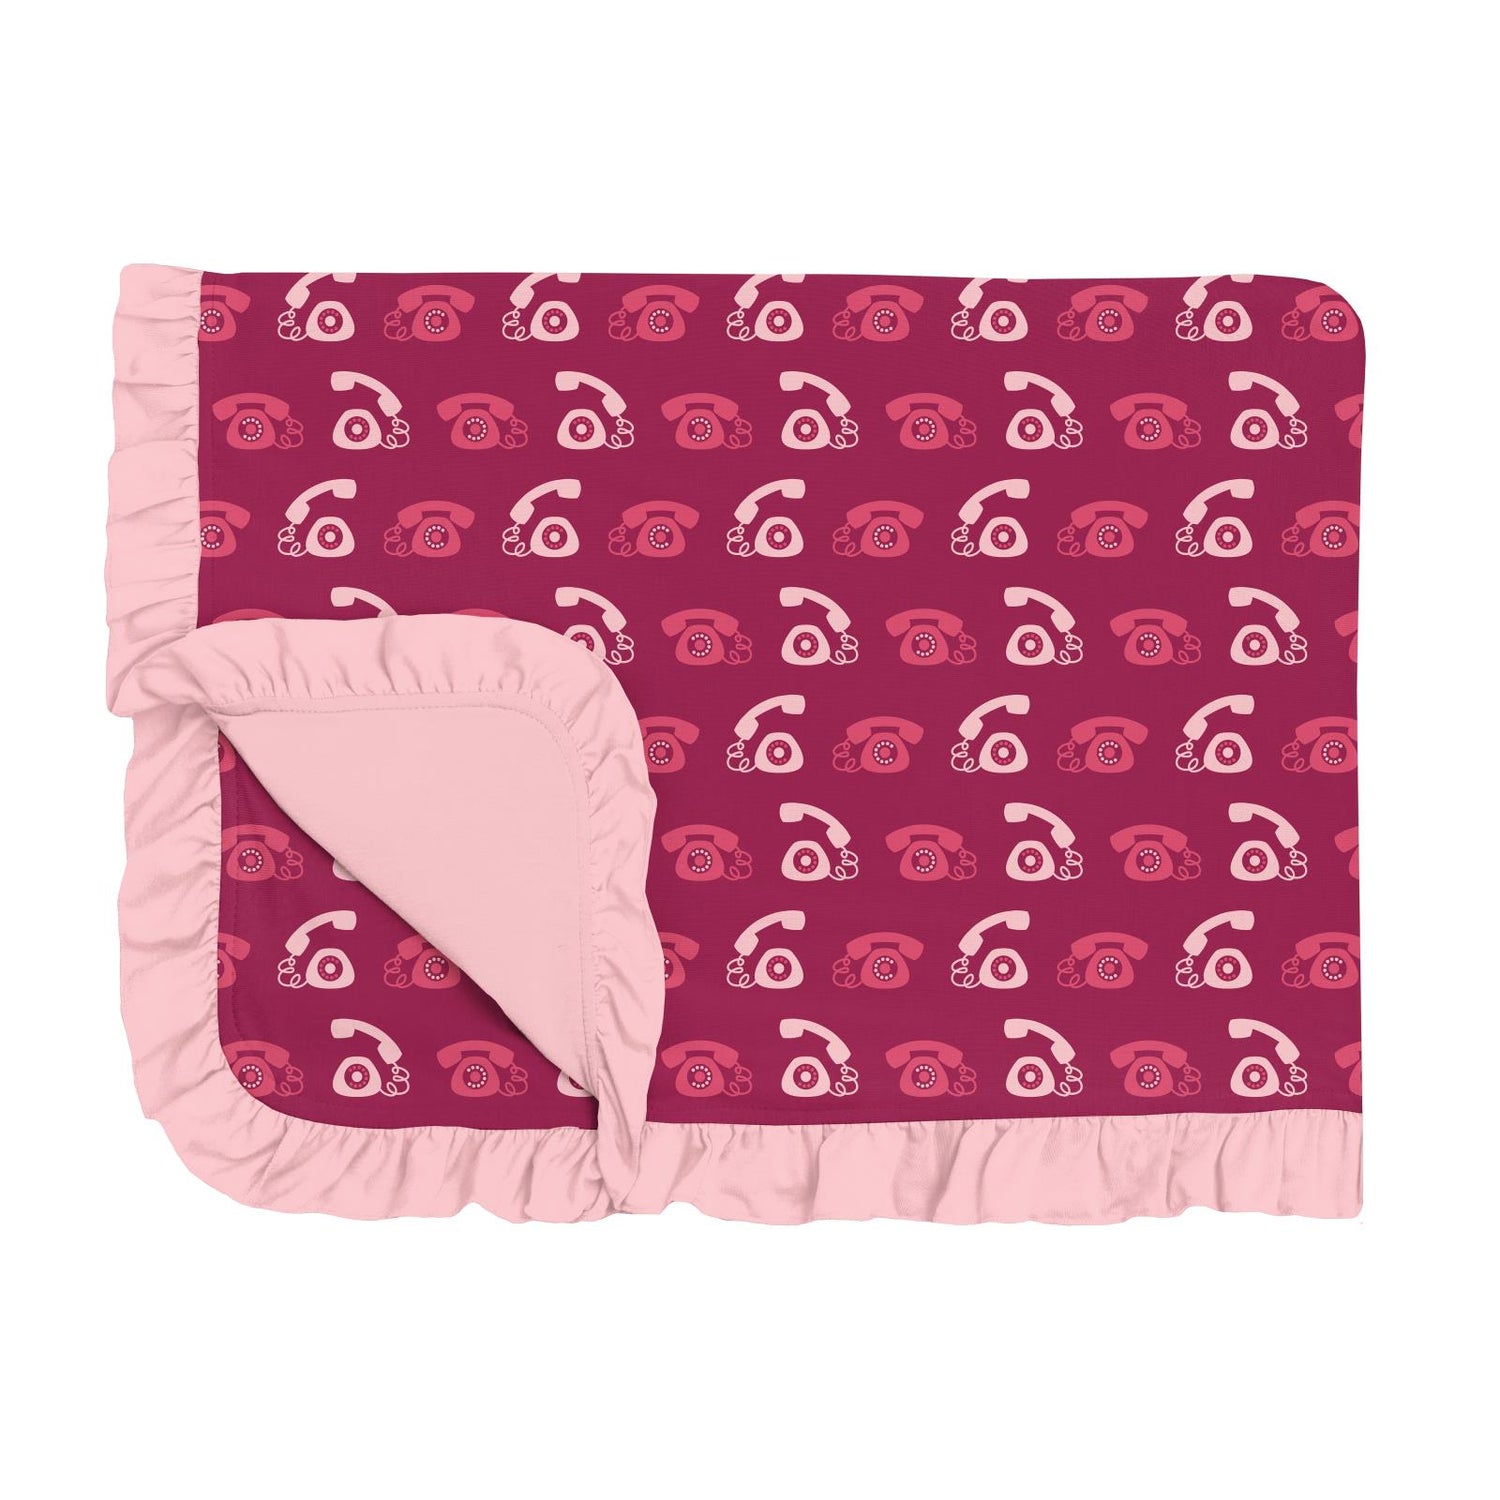 Print Ruffle Toddler Blanket in Berry Telephone